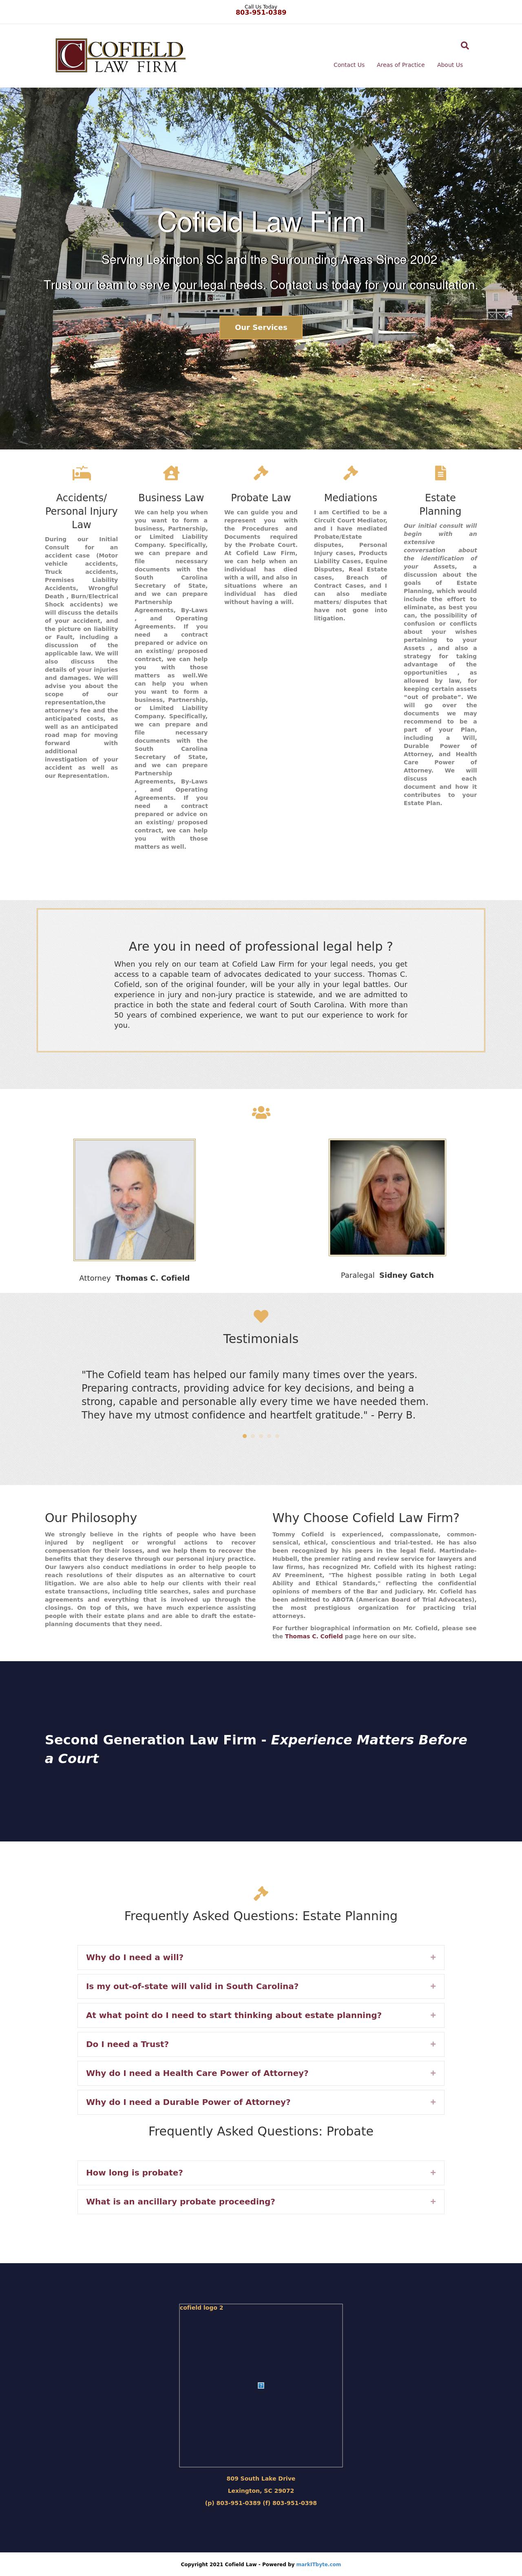 Cofield Law Firm - Lexington SC Lawyers